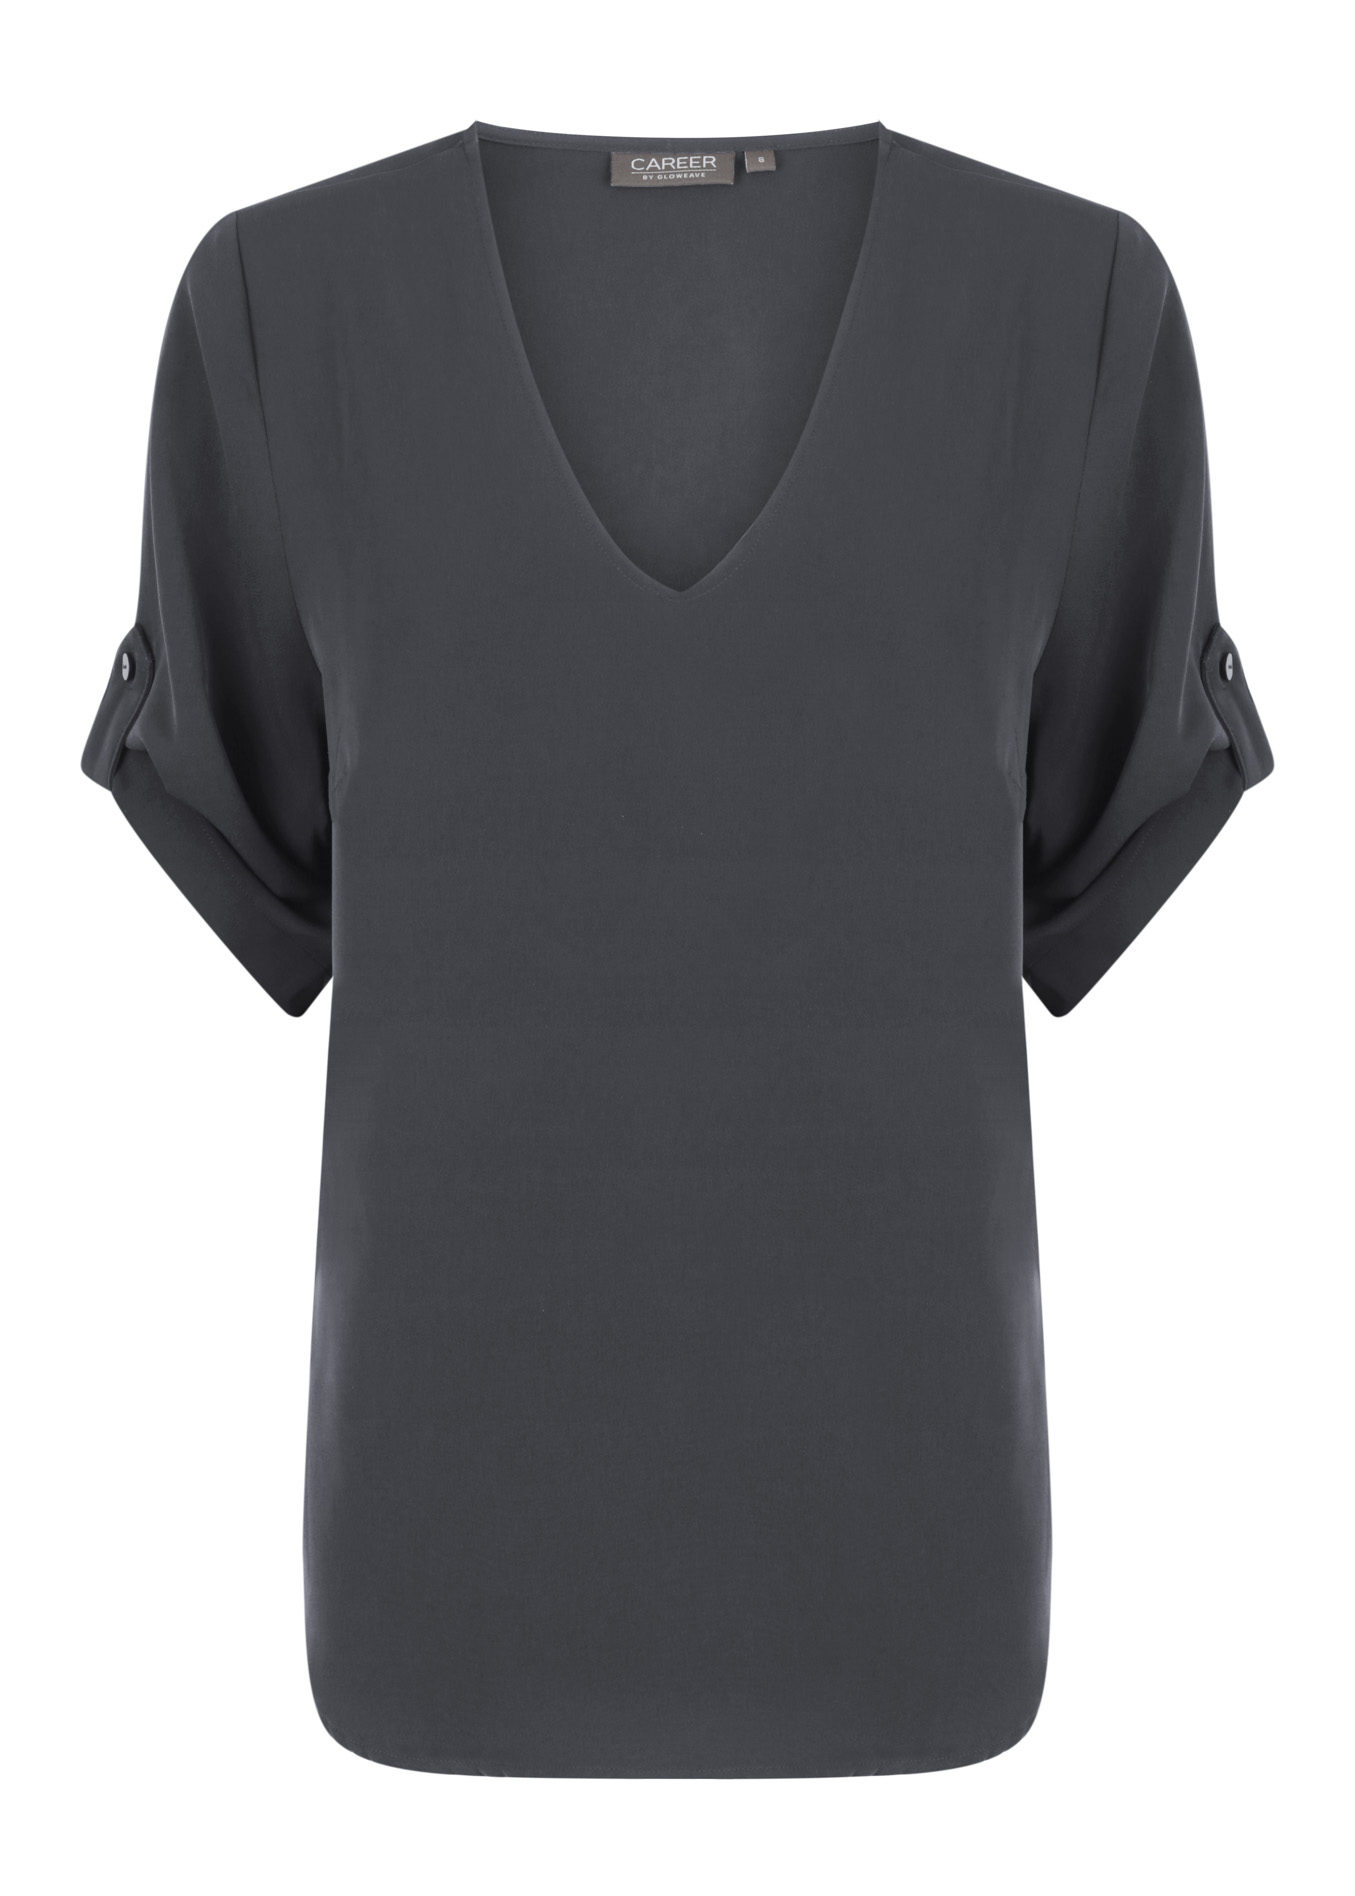 Reece Half Sleeve V-Neck Top - Charcoal - Uniform Edit